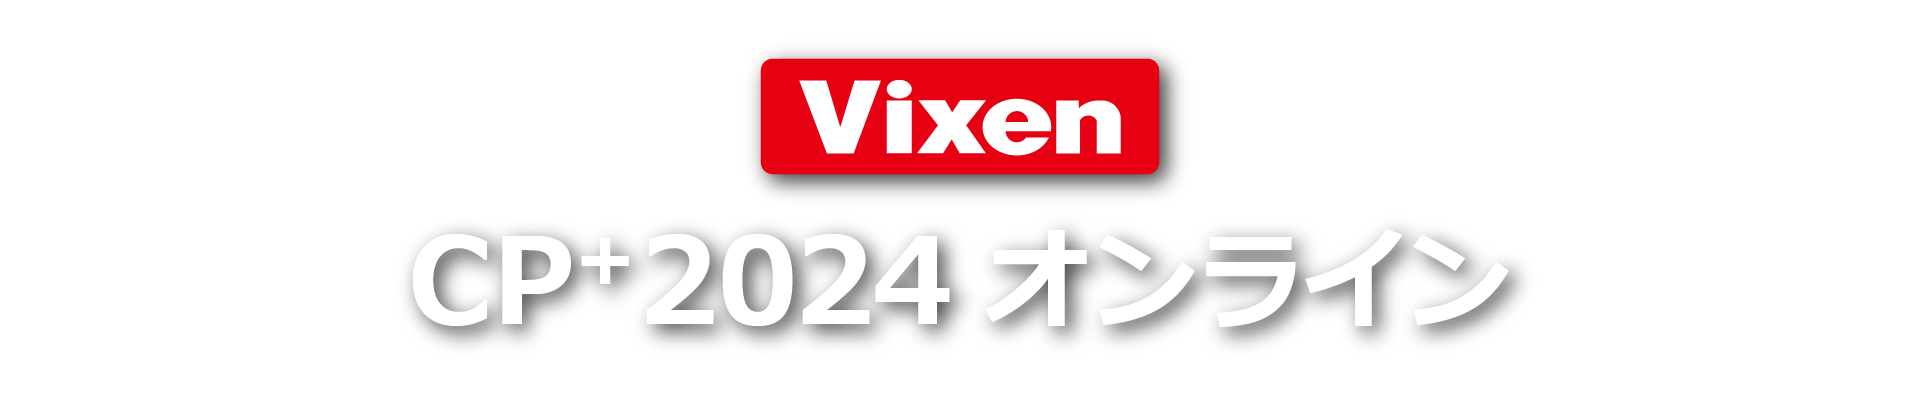 Vixen CP+2024 オンライン